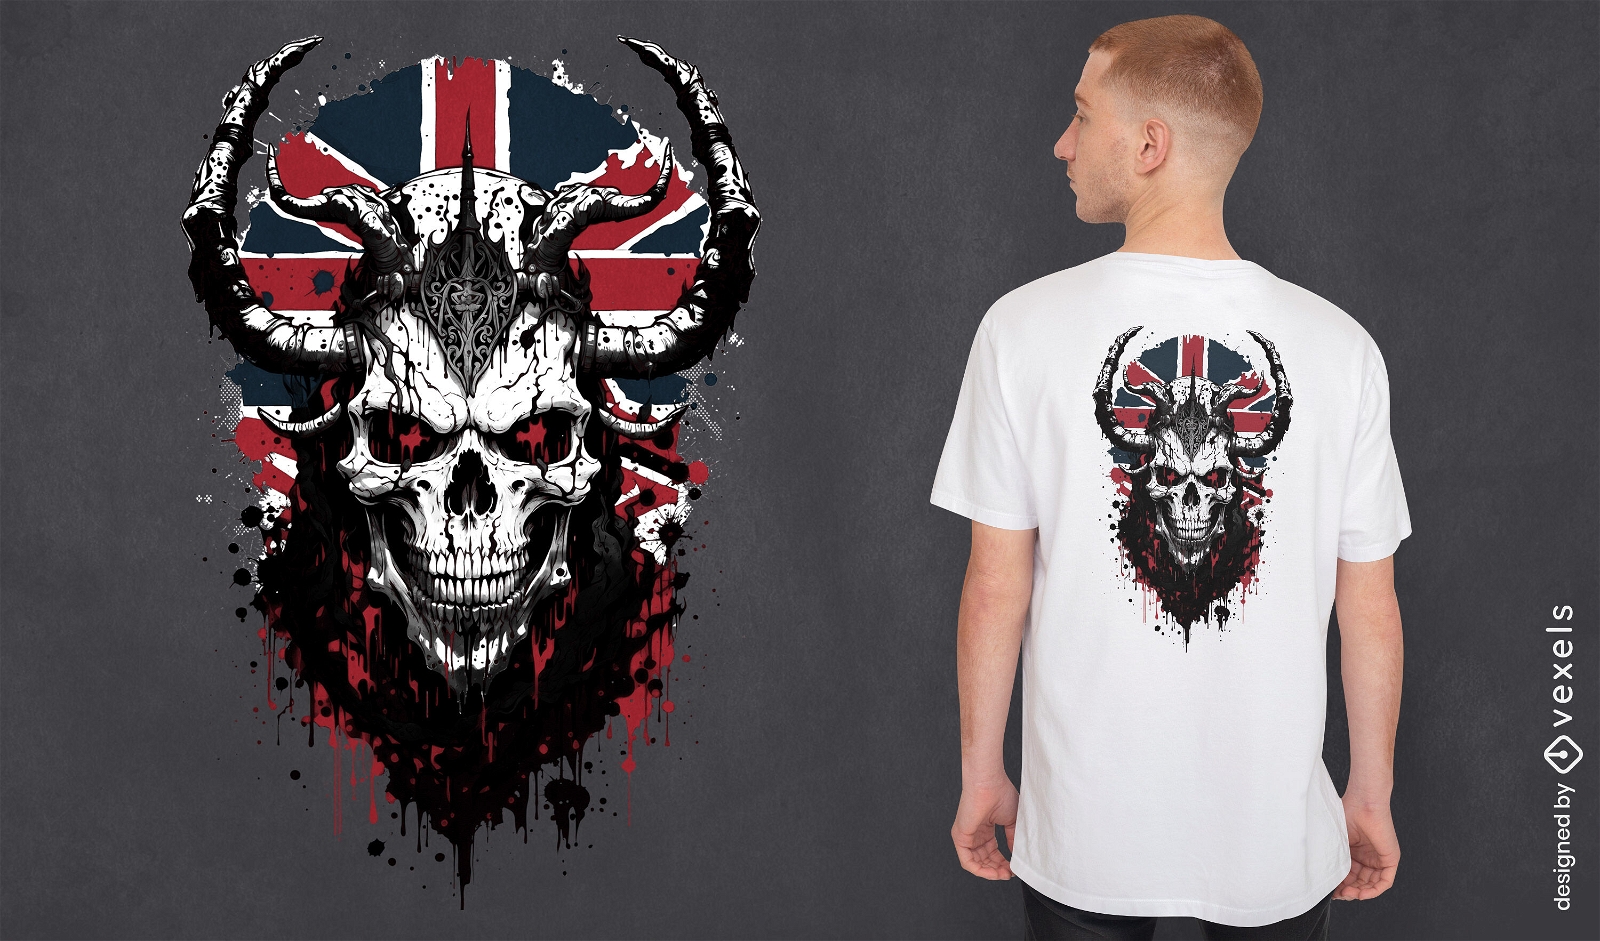 Union Jack skull t-shirt design